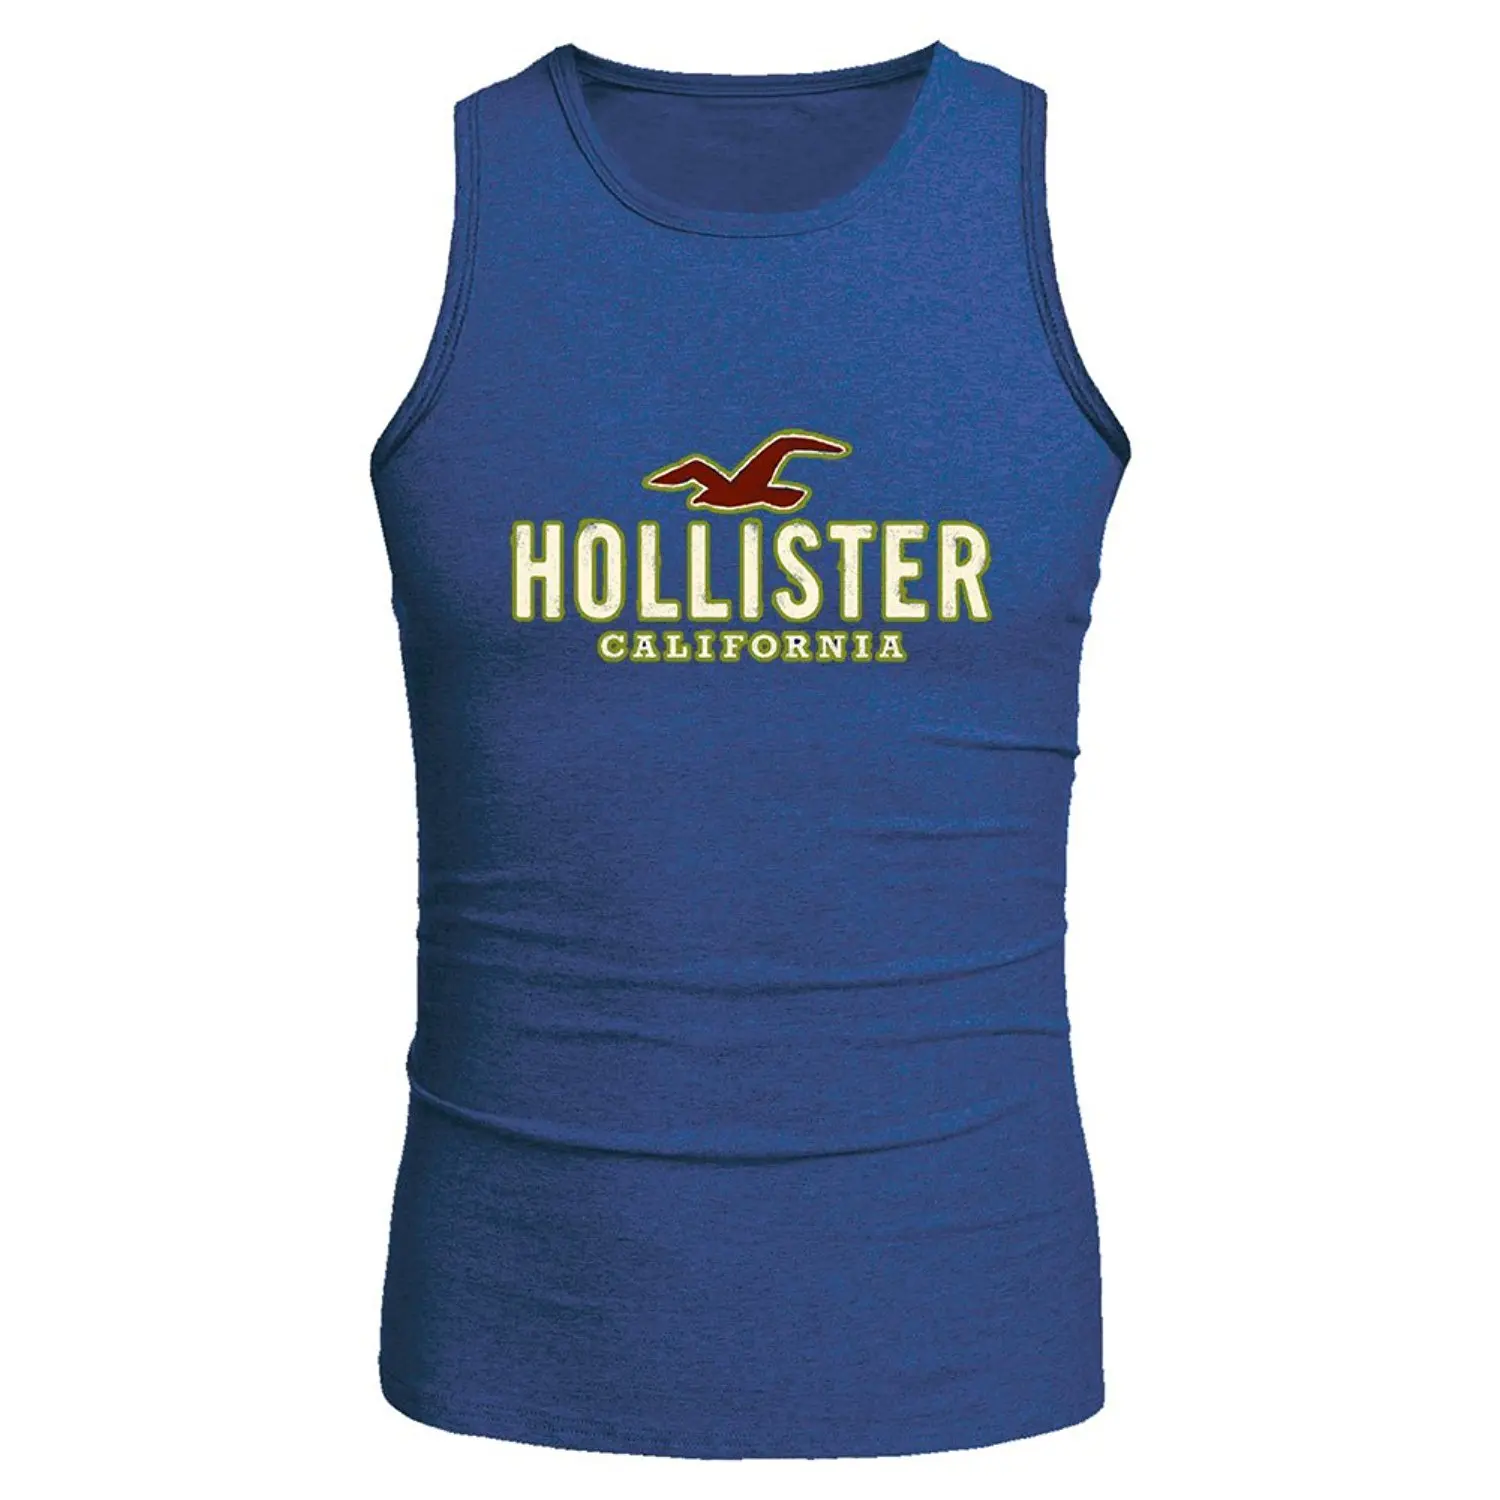 Hollister Top Size Chart